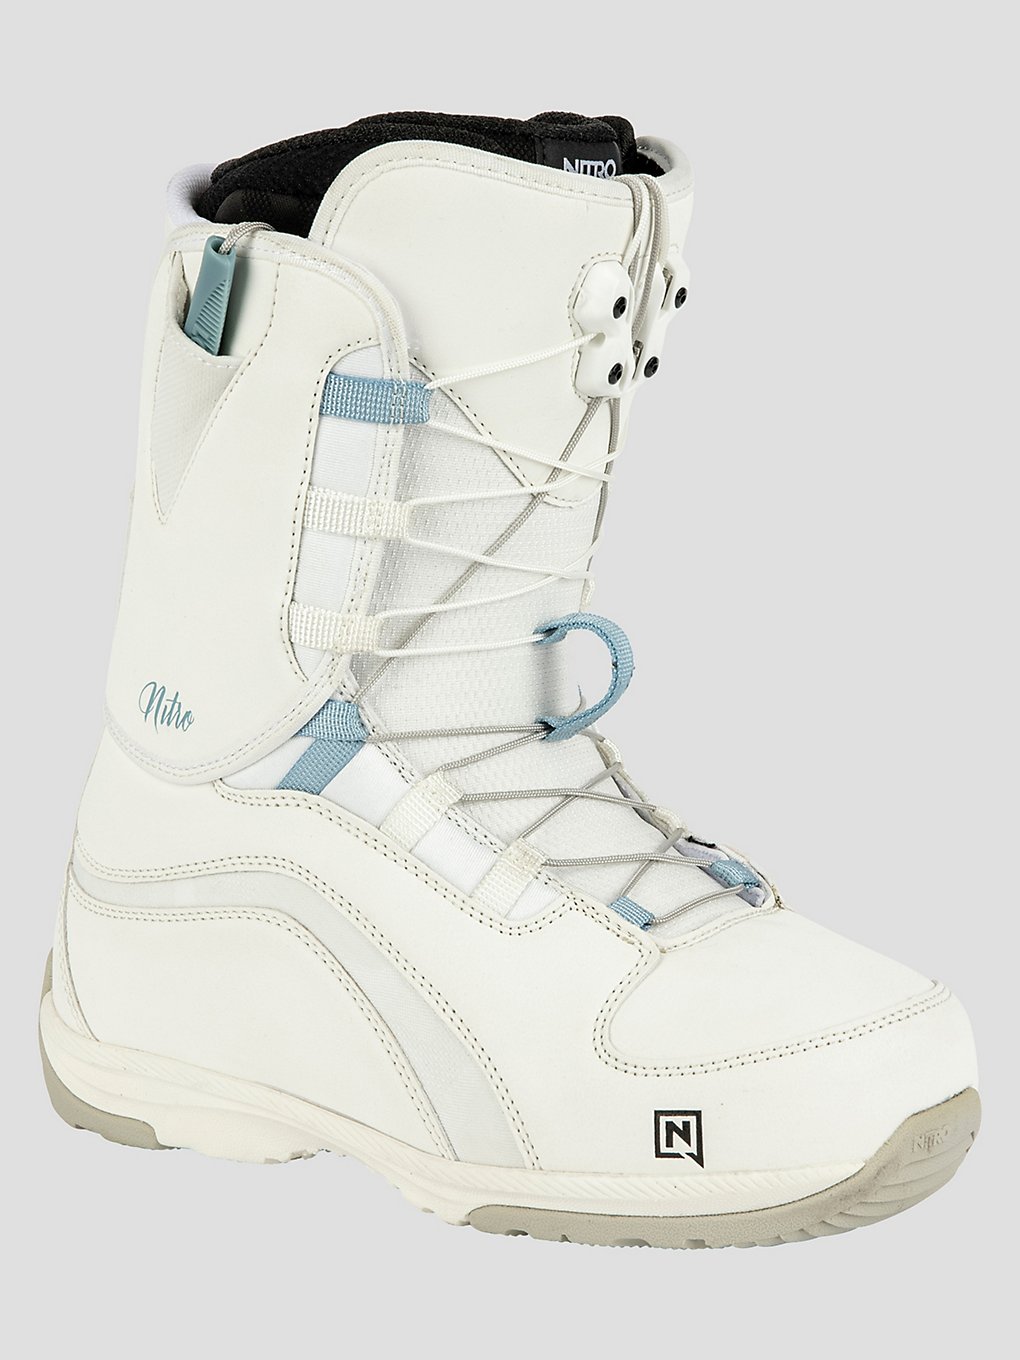 Nitro Futura TLS 2023 Snowboard Boots blue kaufen